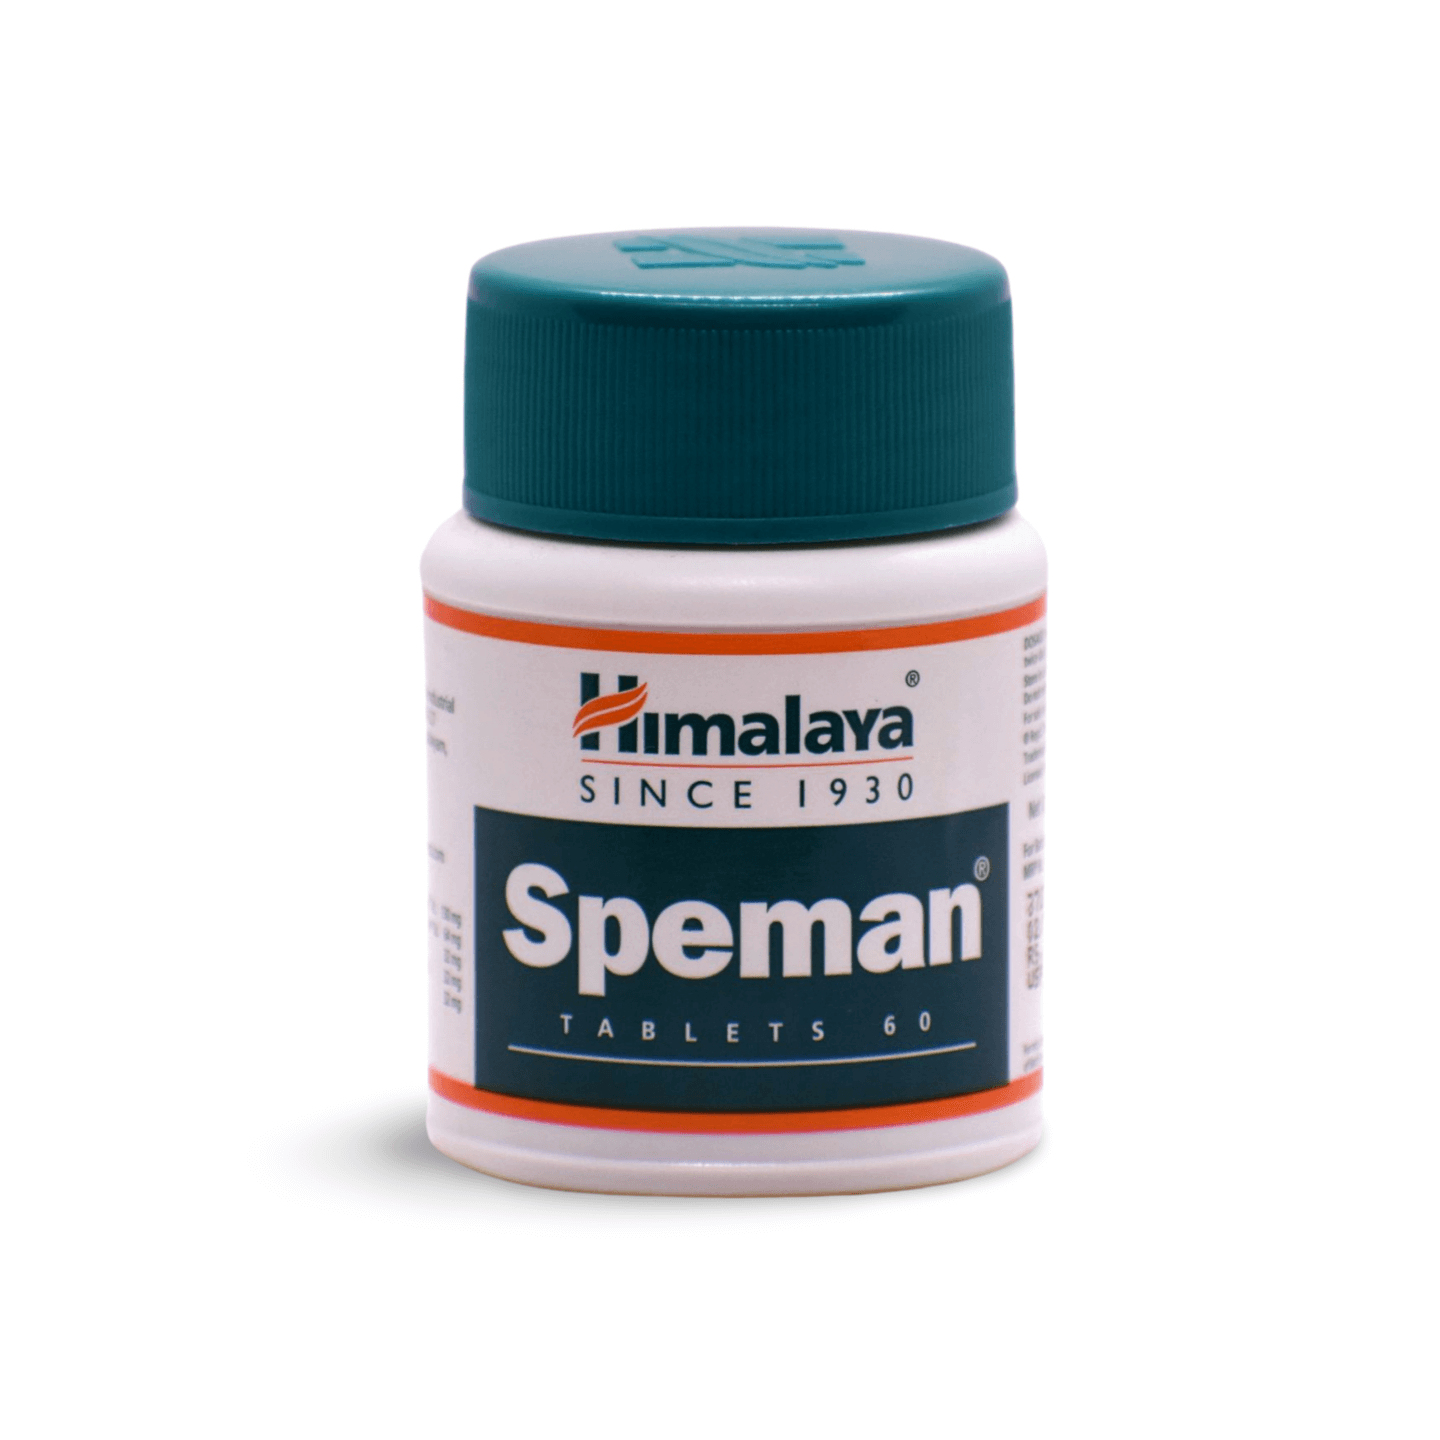 Himalaya Speman Tablet - Totally Indian